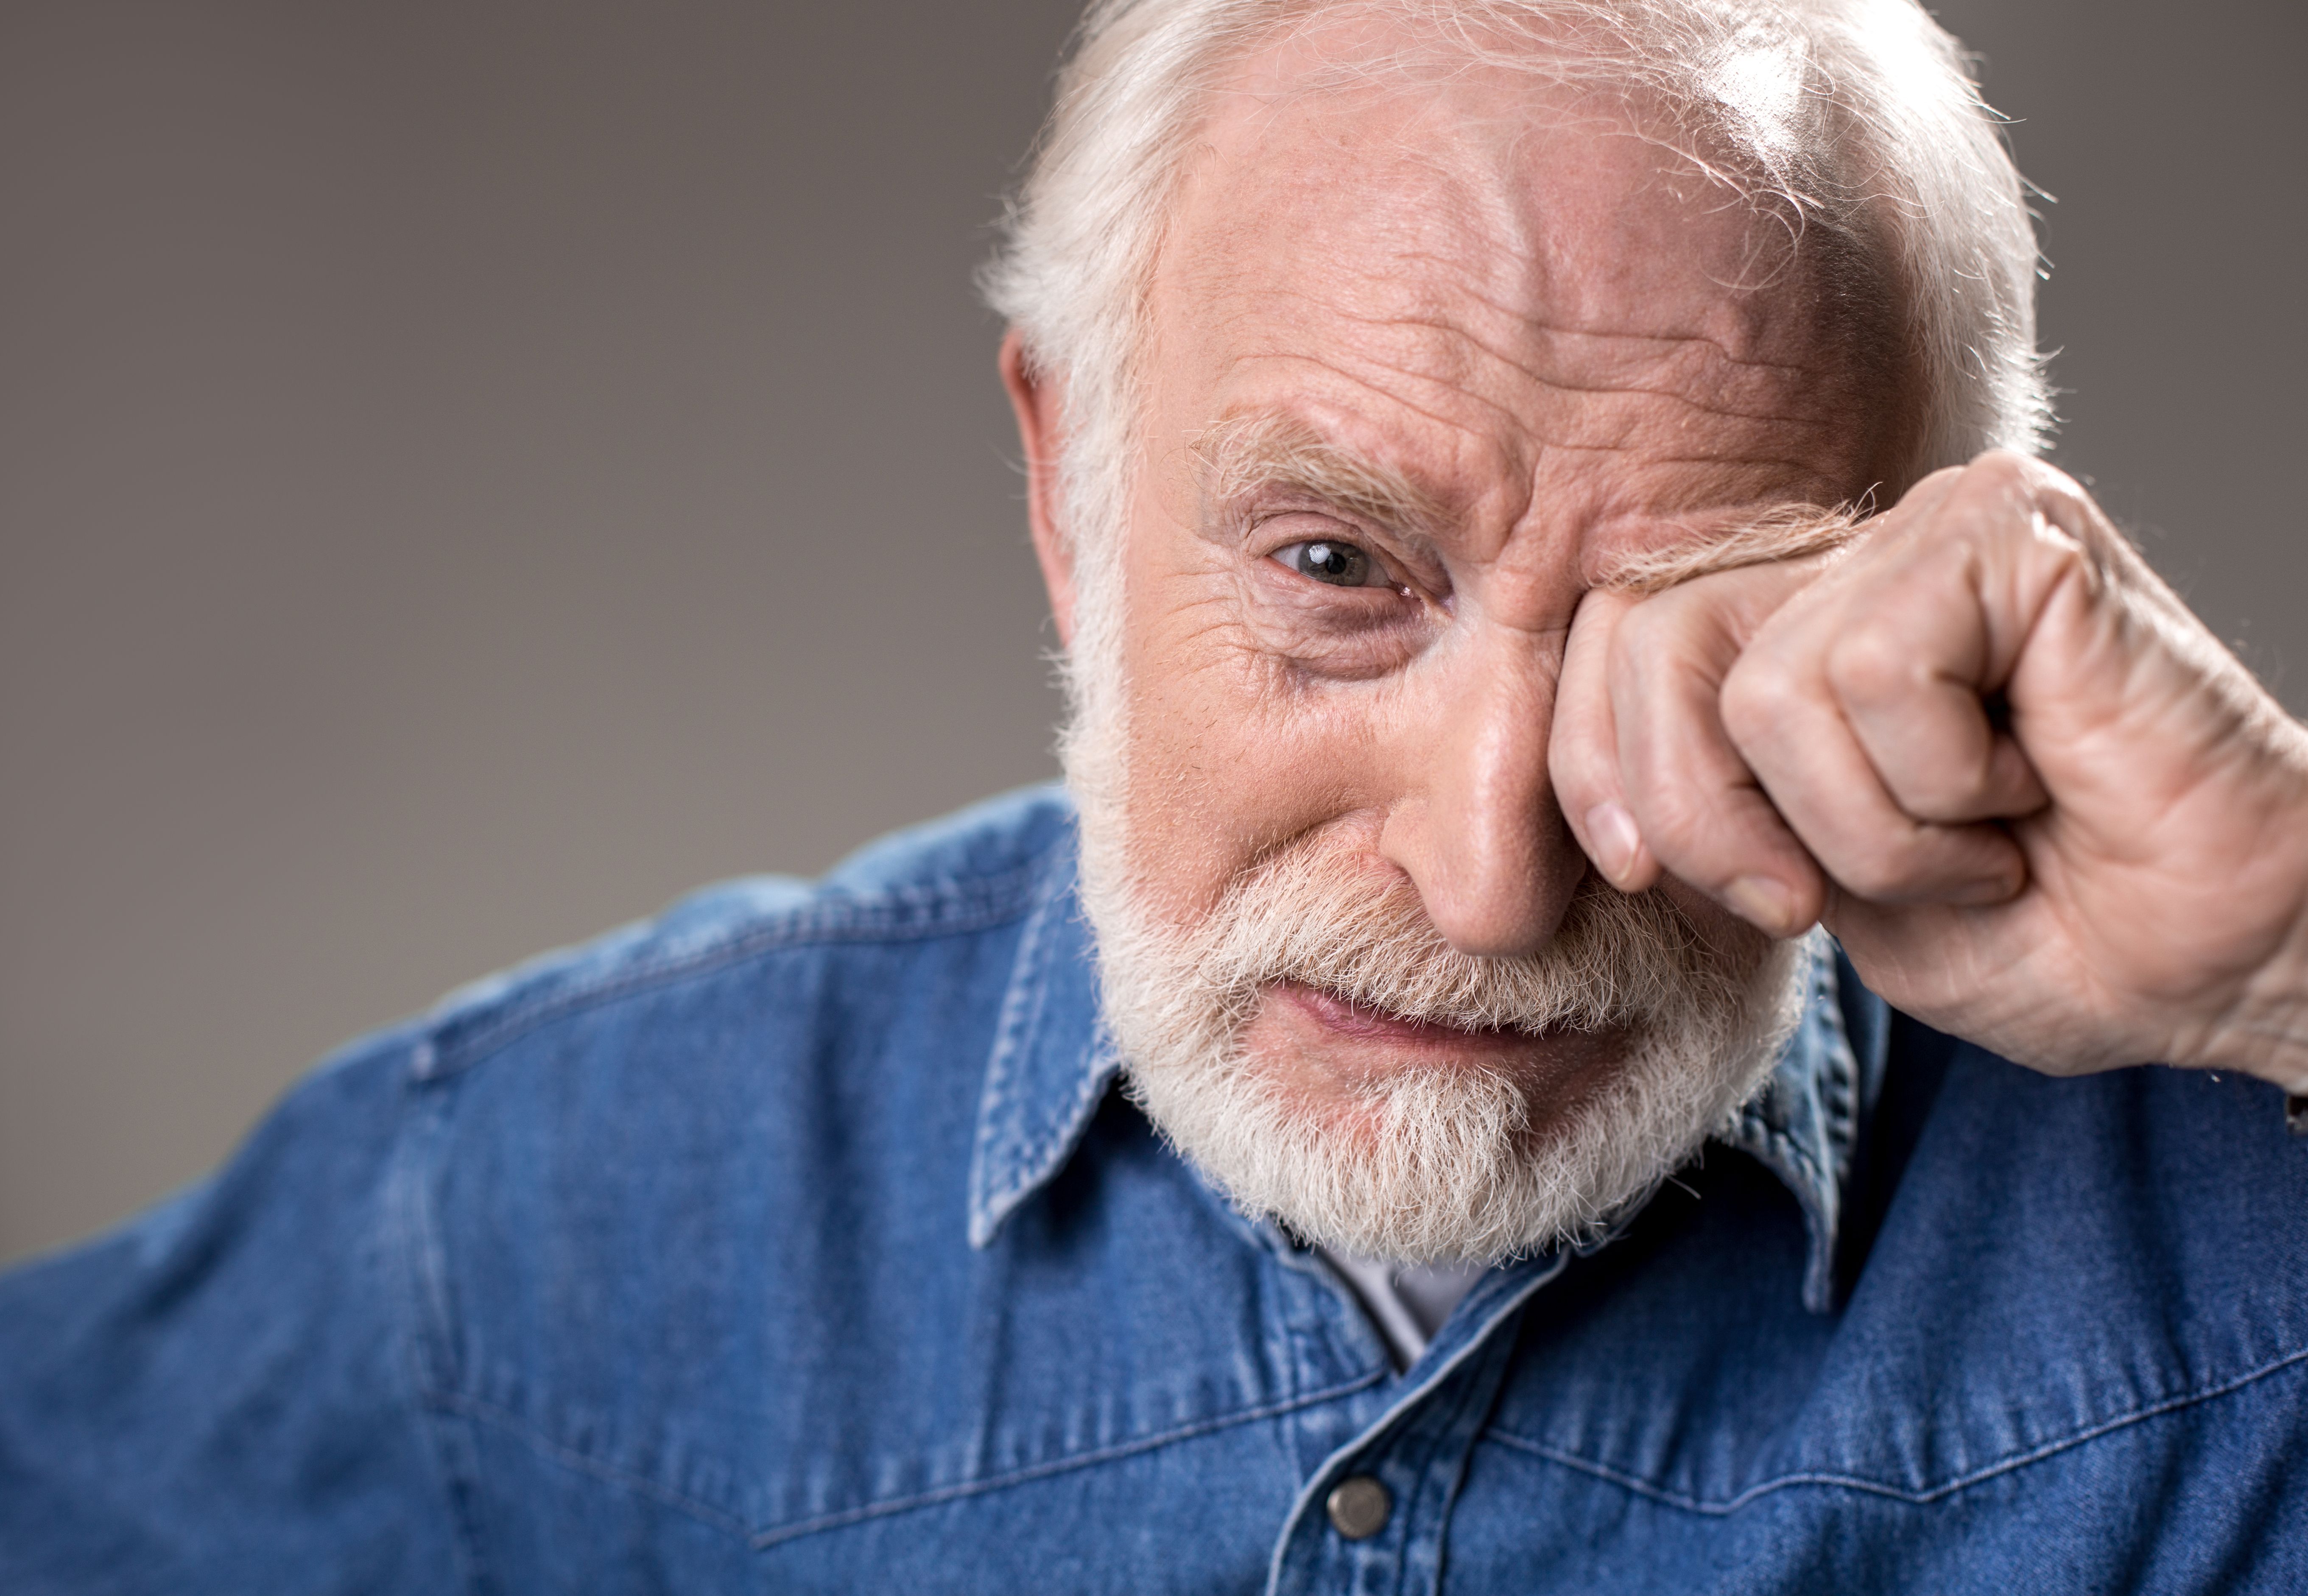 Grandfather rubbing his eye. | Source: Shutterstock